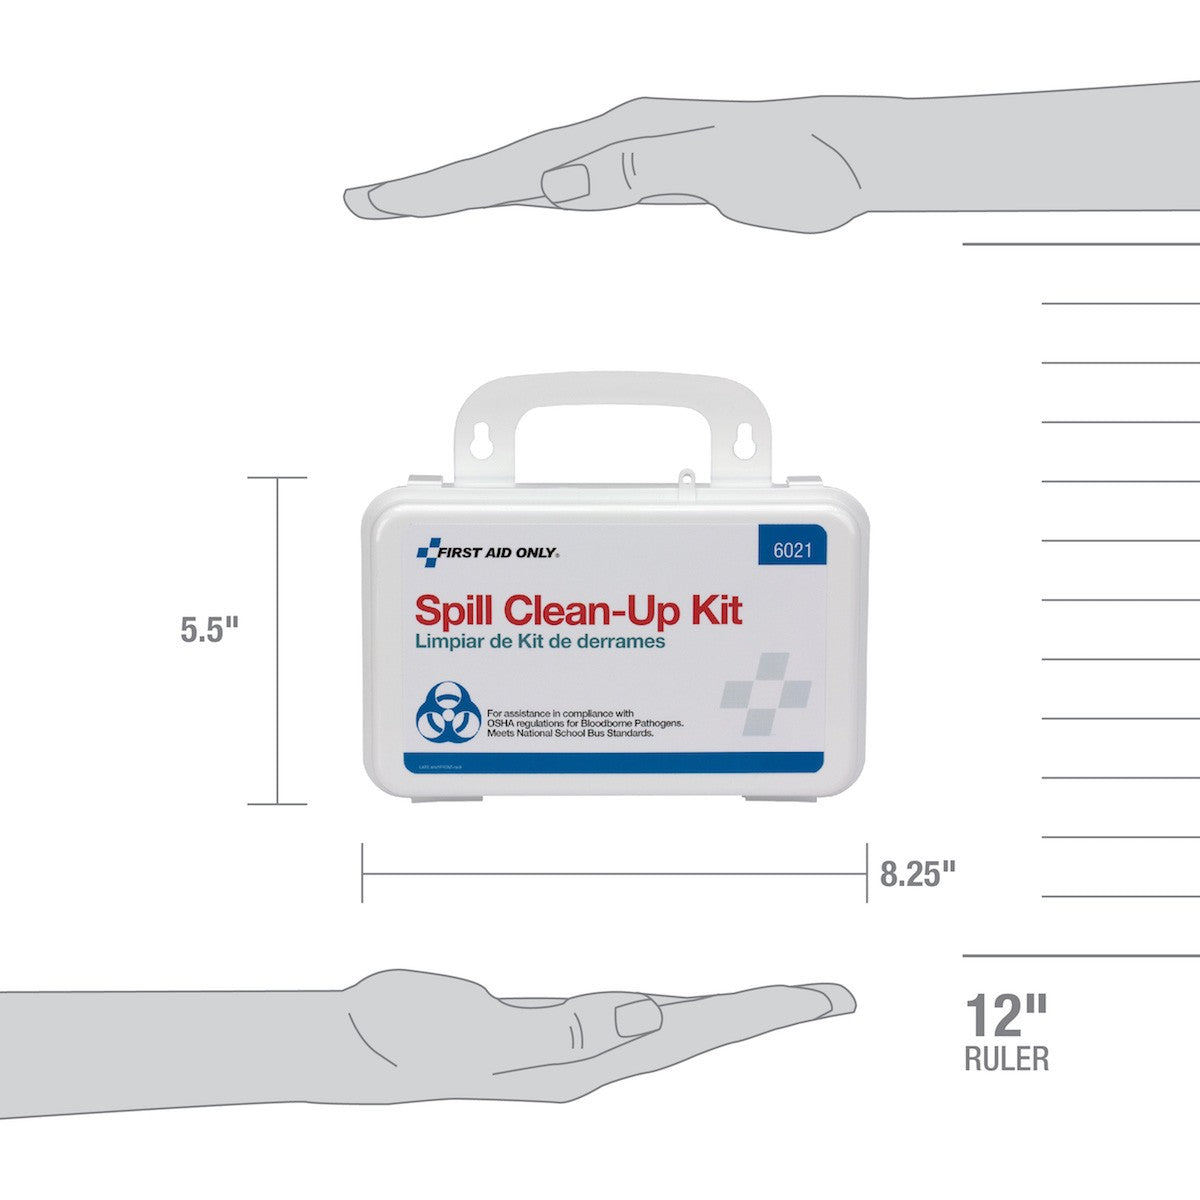 21 Piece Blood Borne Pathogen Spill Clean-Up Kit In Weatherproof Steel Case- W-6021-S